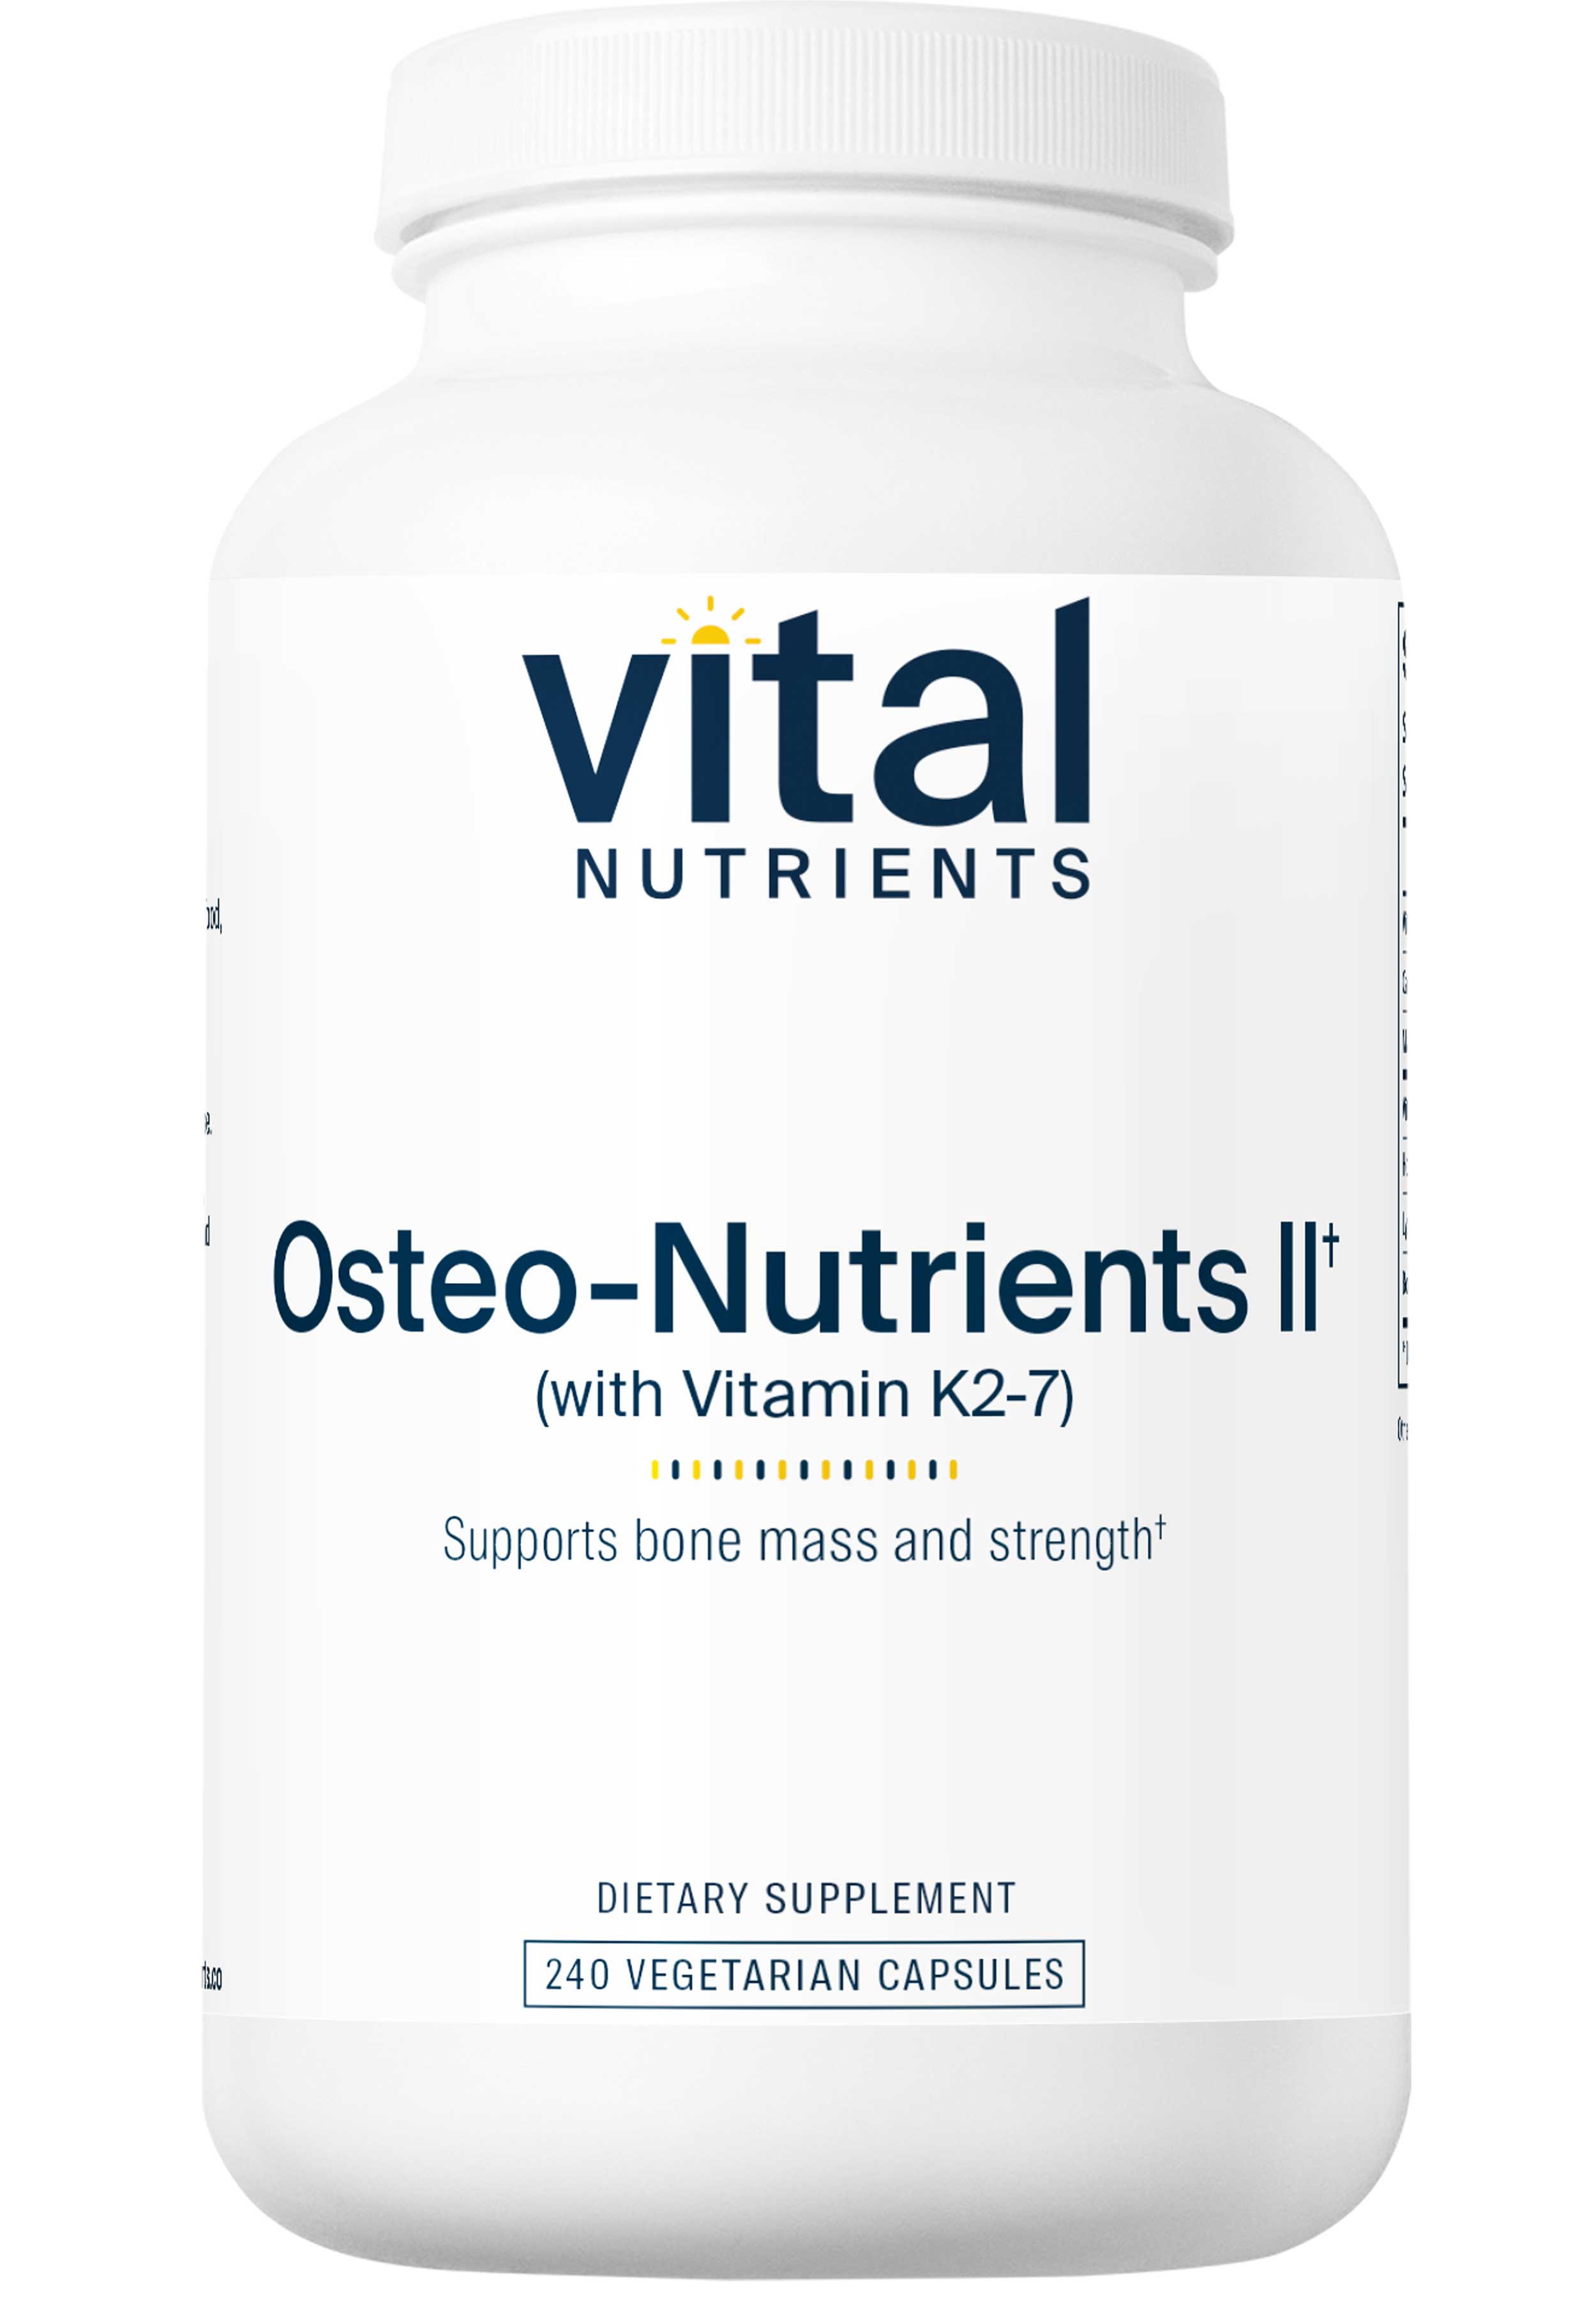 Vital Nutrients Osteo-Nutrients II with Vitamin K2-7